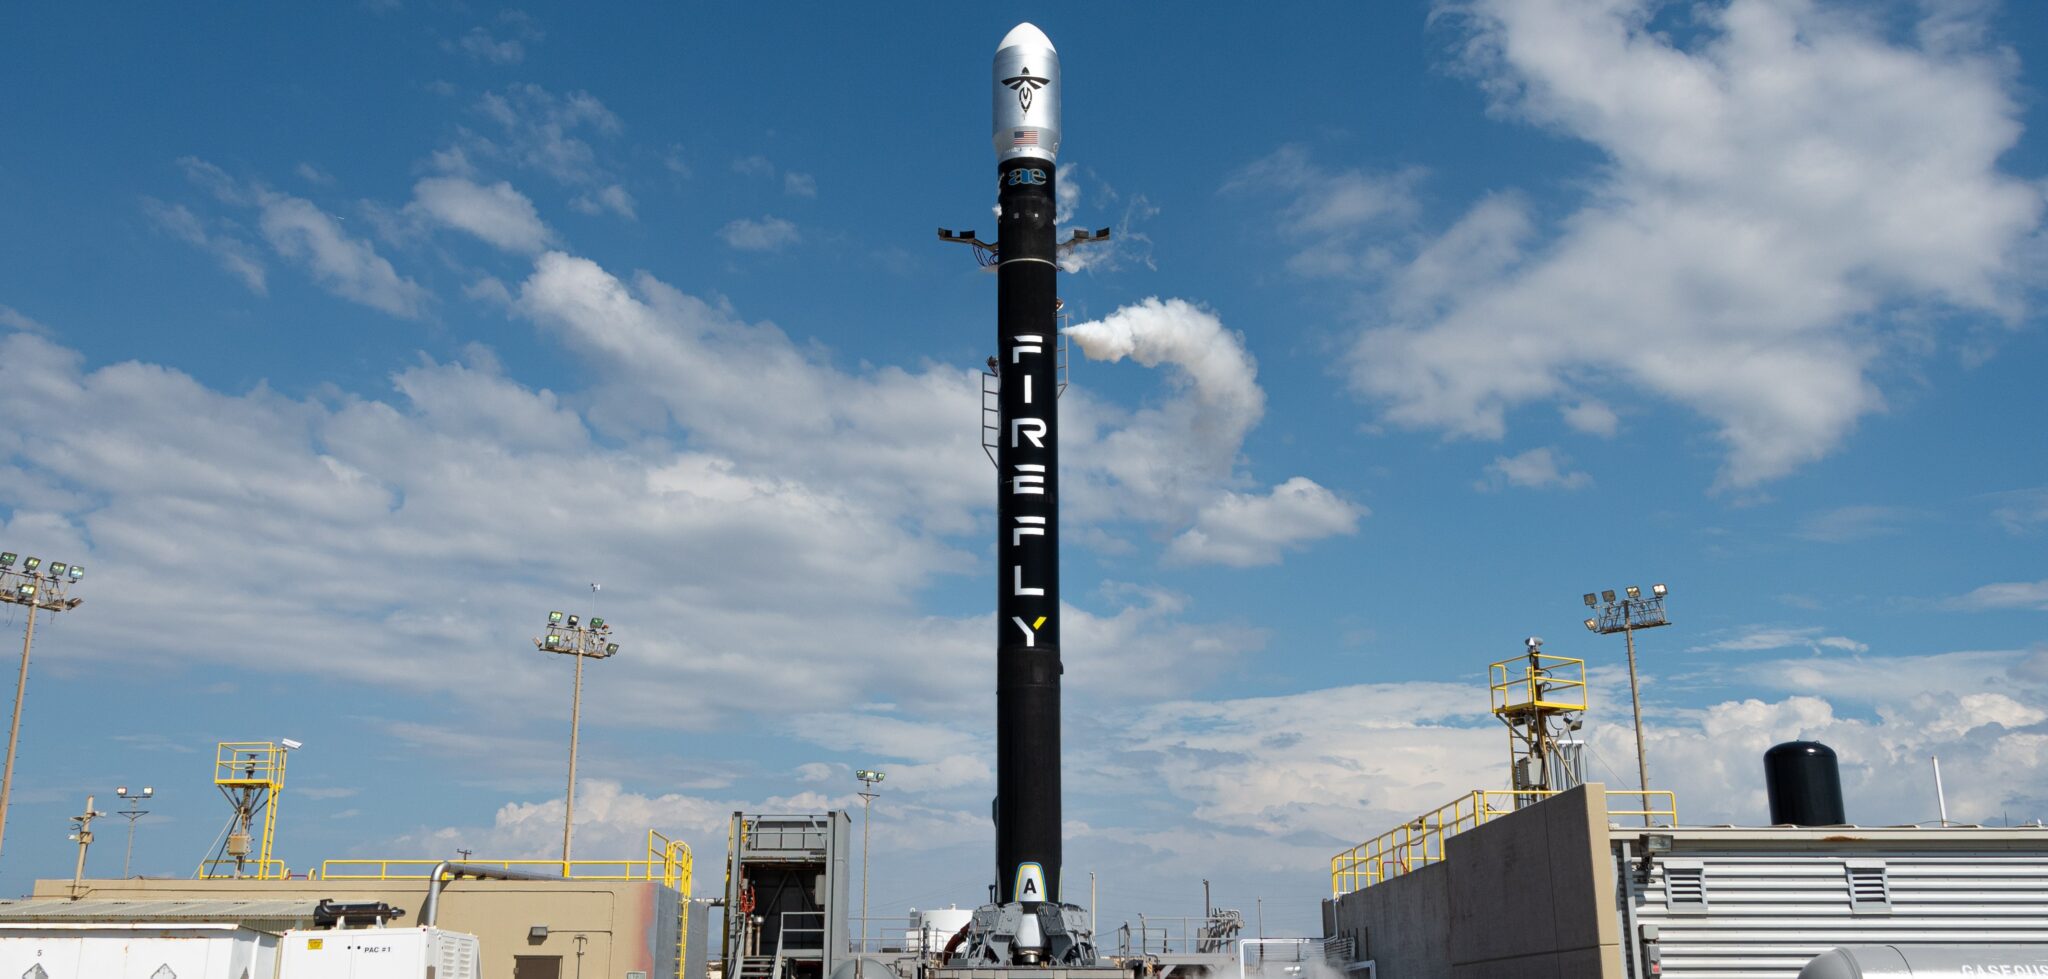 Firefly Aerospace's Alpha rocket on the Launch Pad Vandenburg